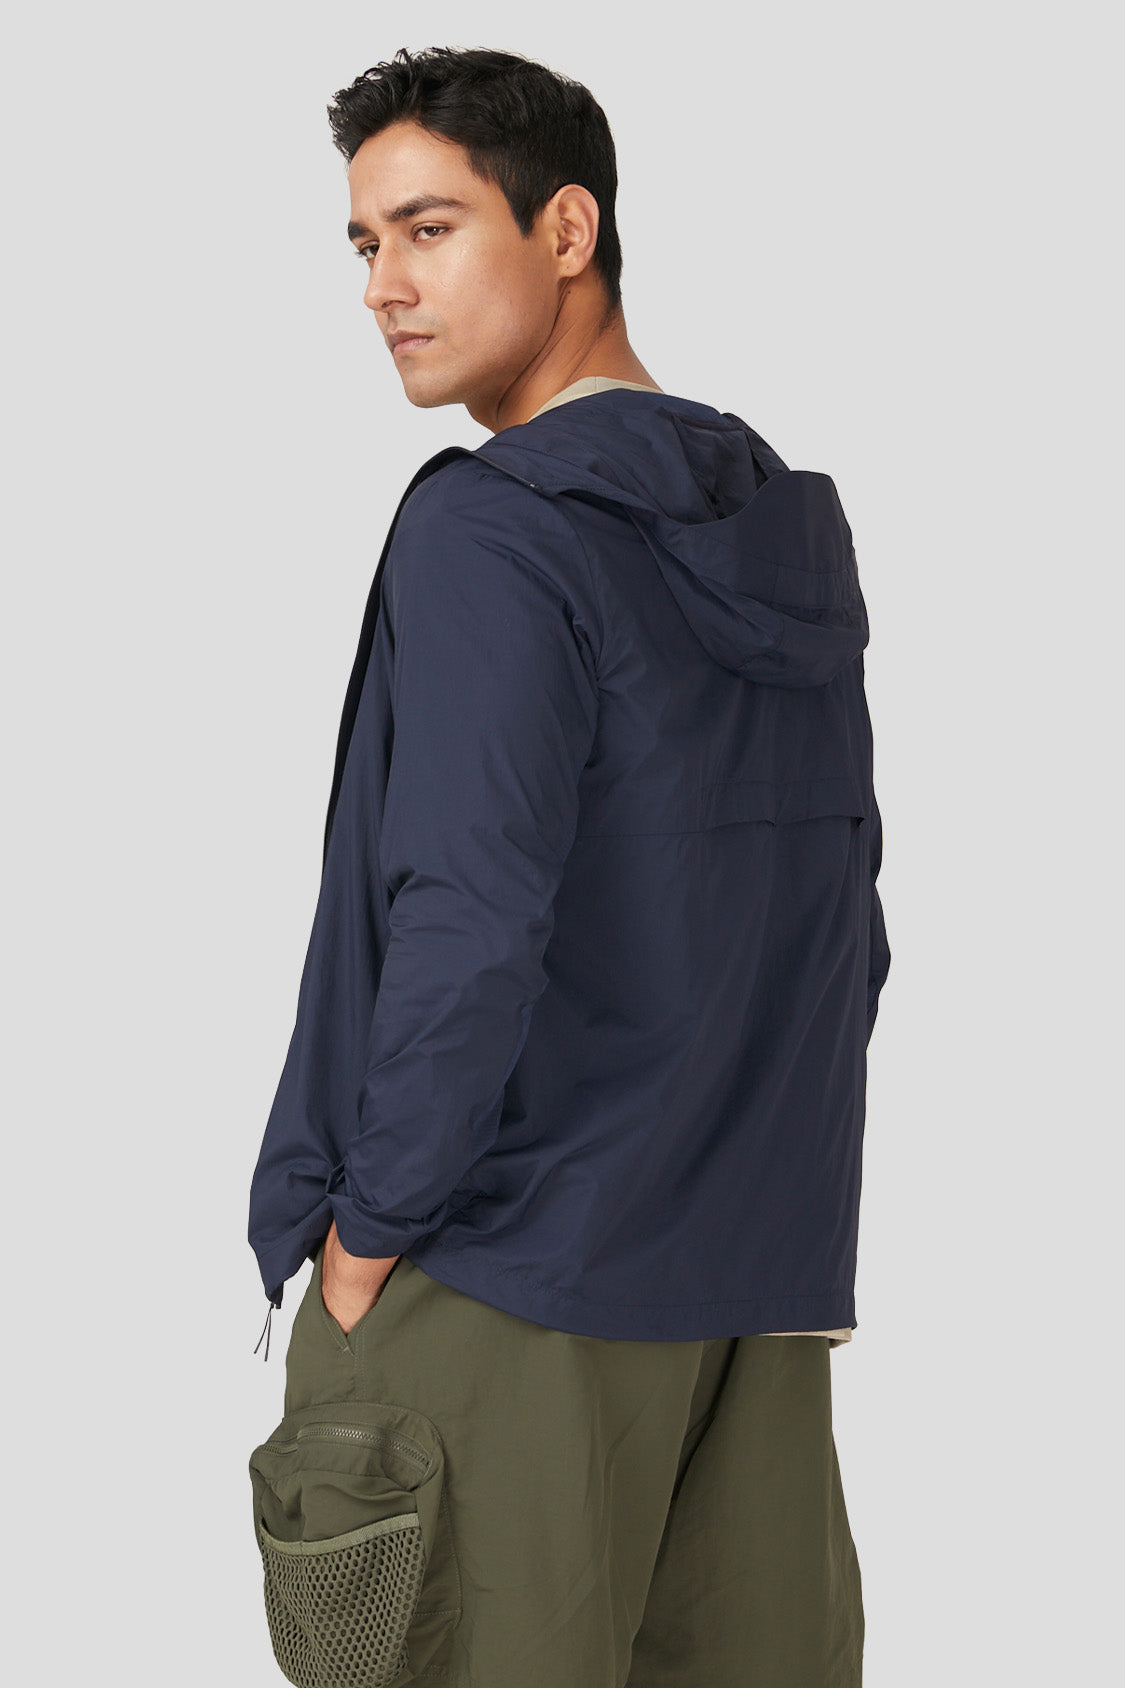 UV Protection Jacket, Beneunder Lightweight Zip Up Sun Protection